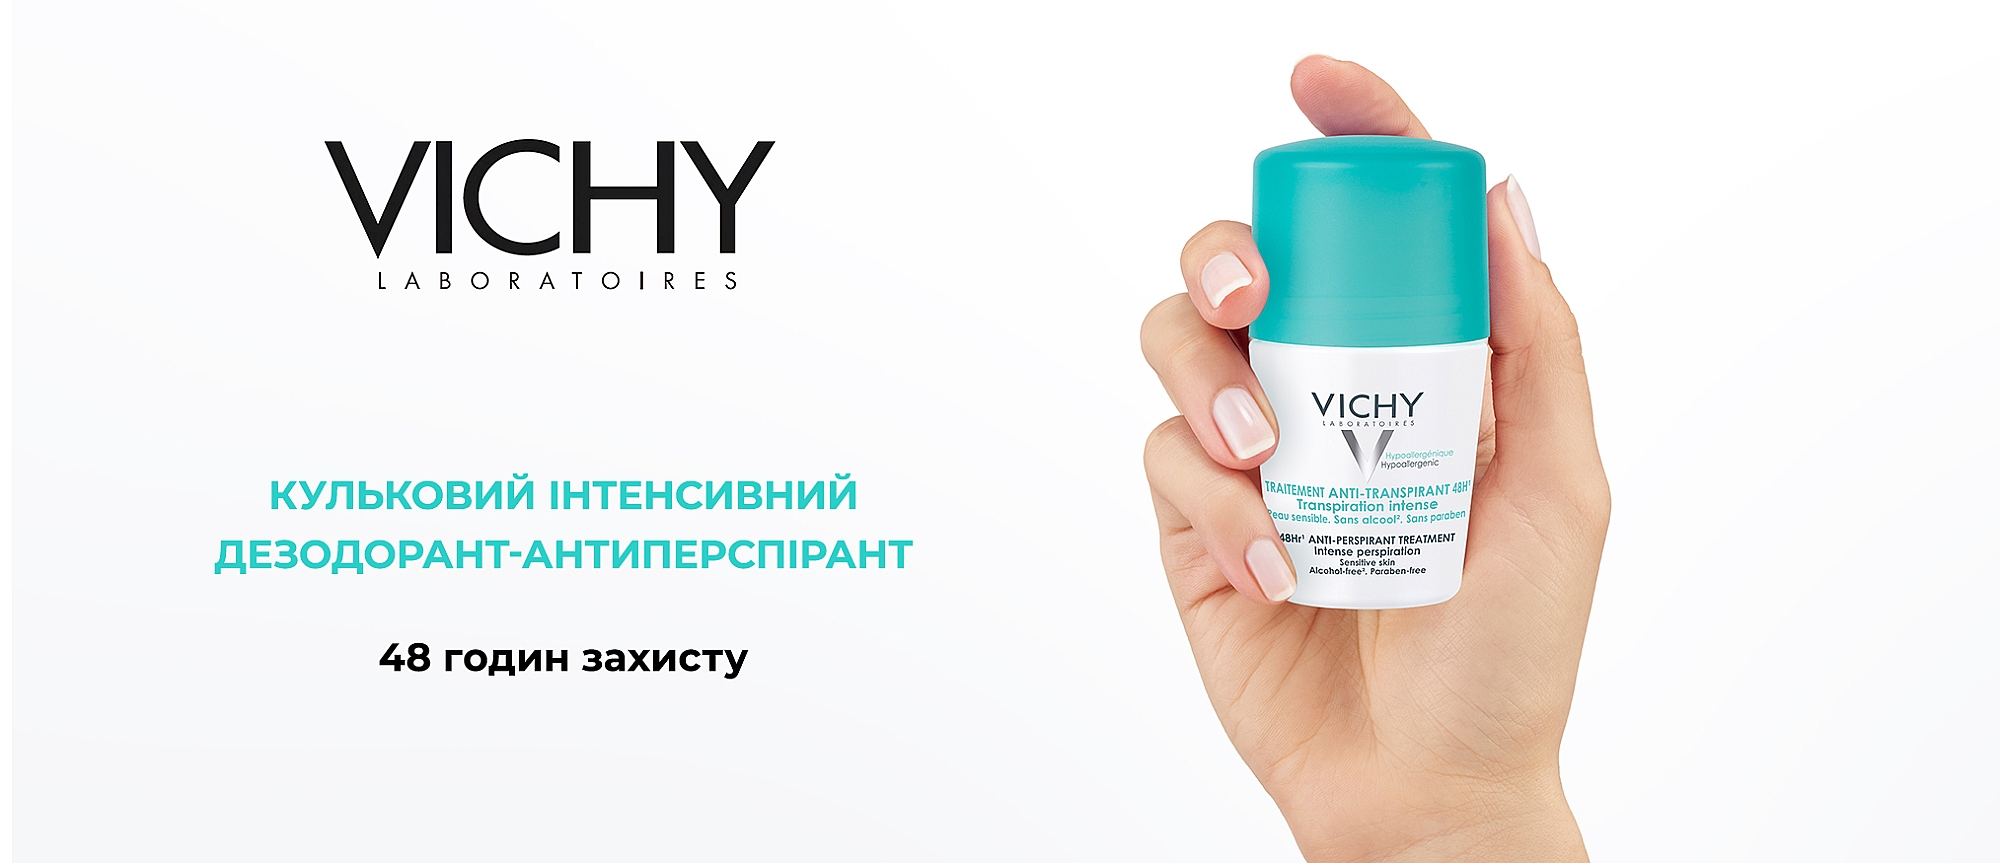 Vichy 48 Hr Anti-Perspirant Treatment